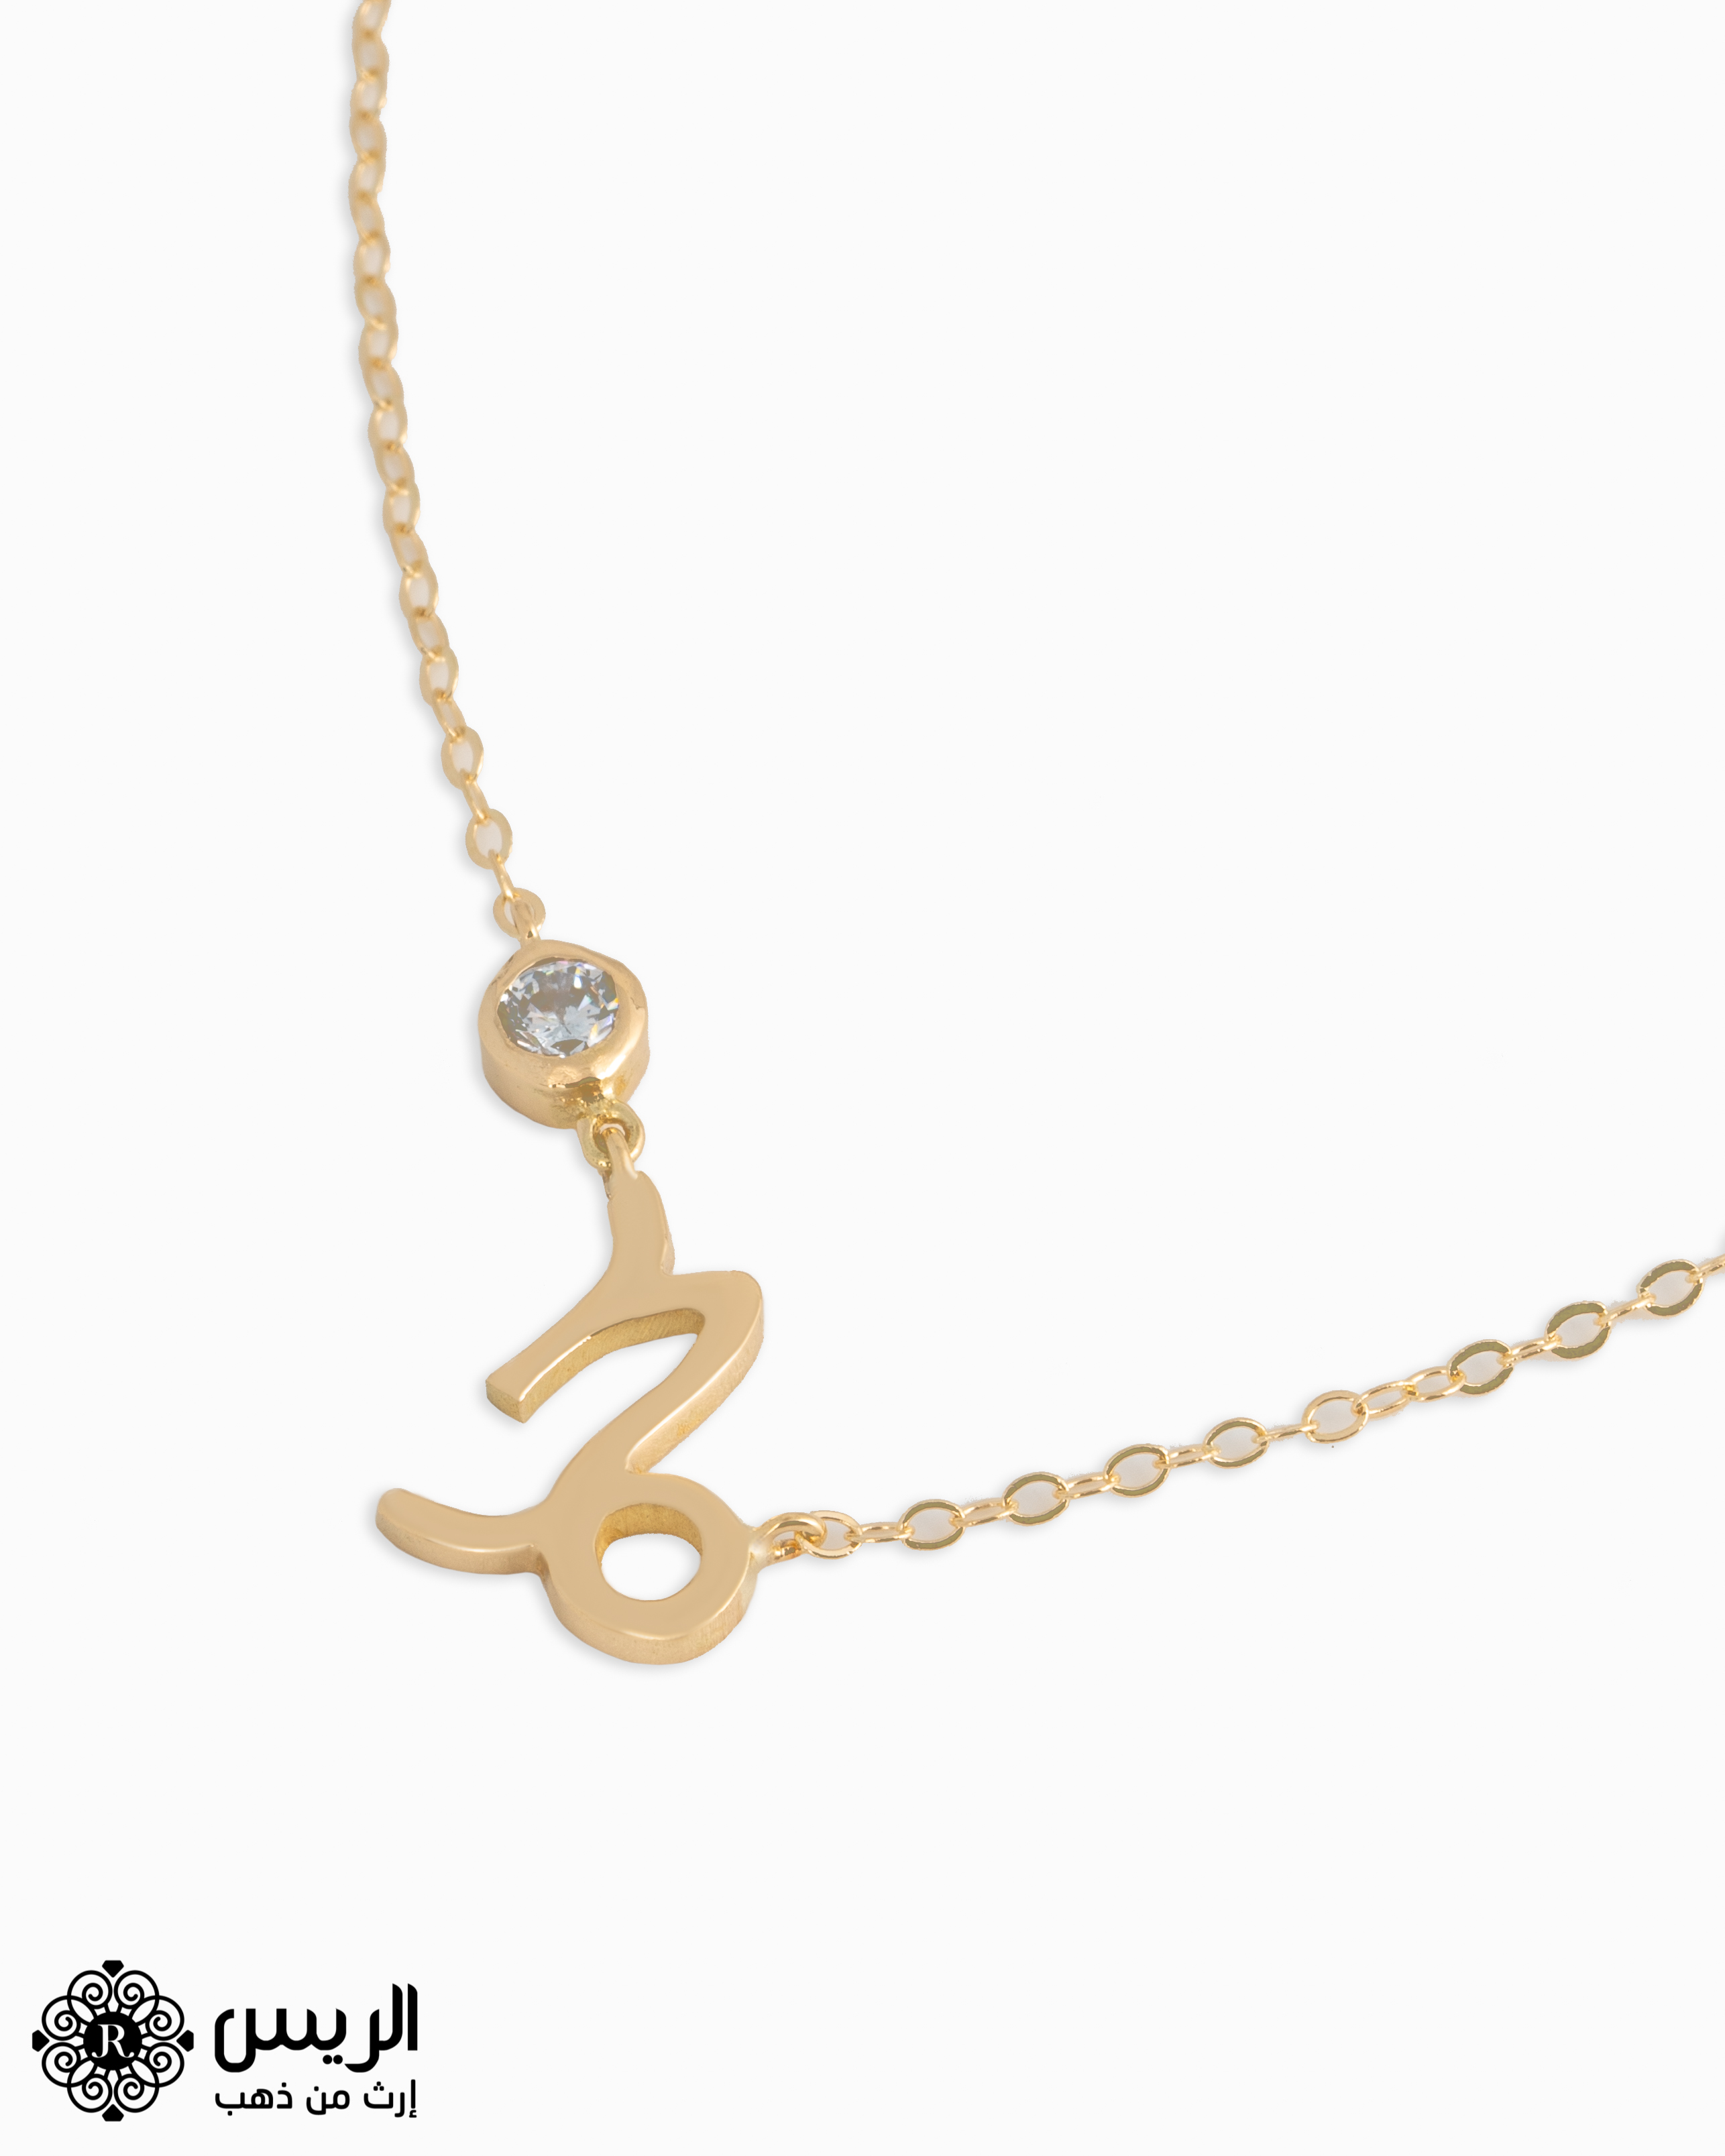 Raies jewelry Capricorn Horoscope Pendant تعليقة برج الجدي الريس للمجوهرات